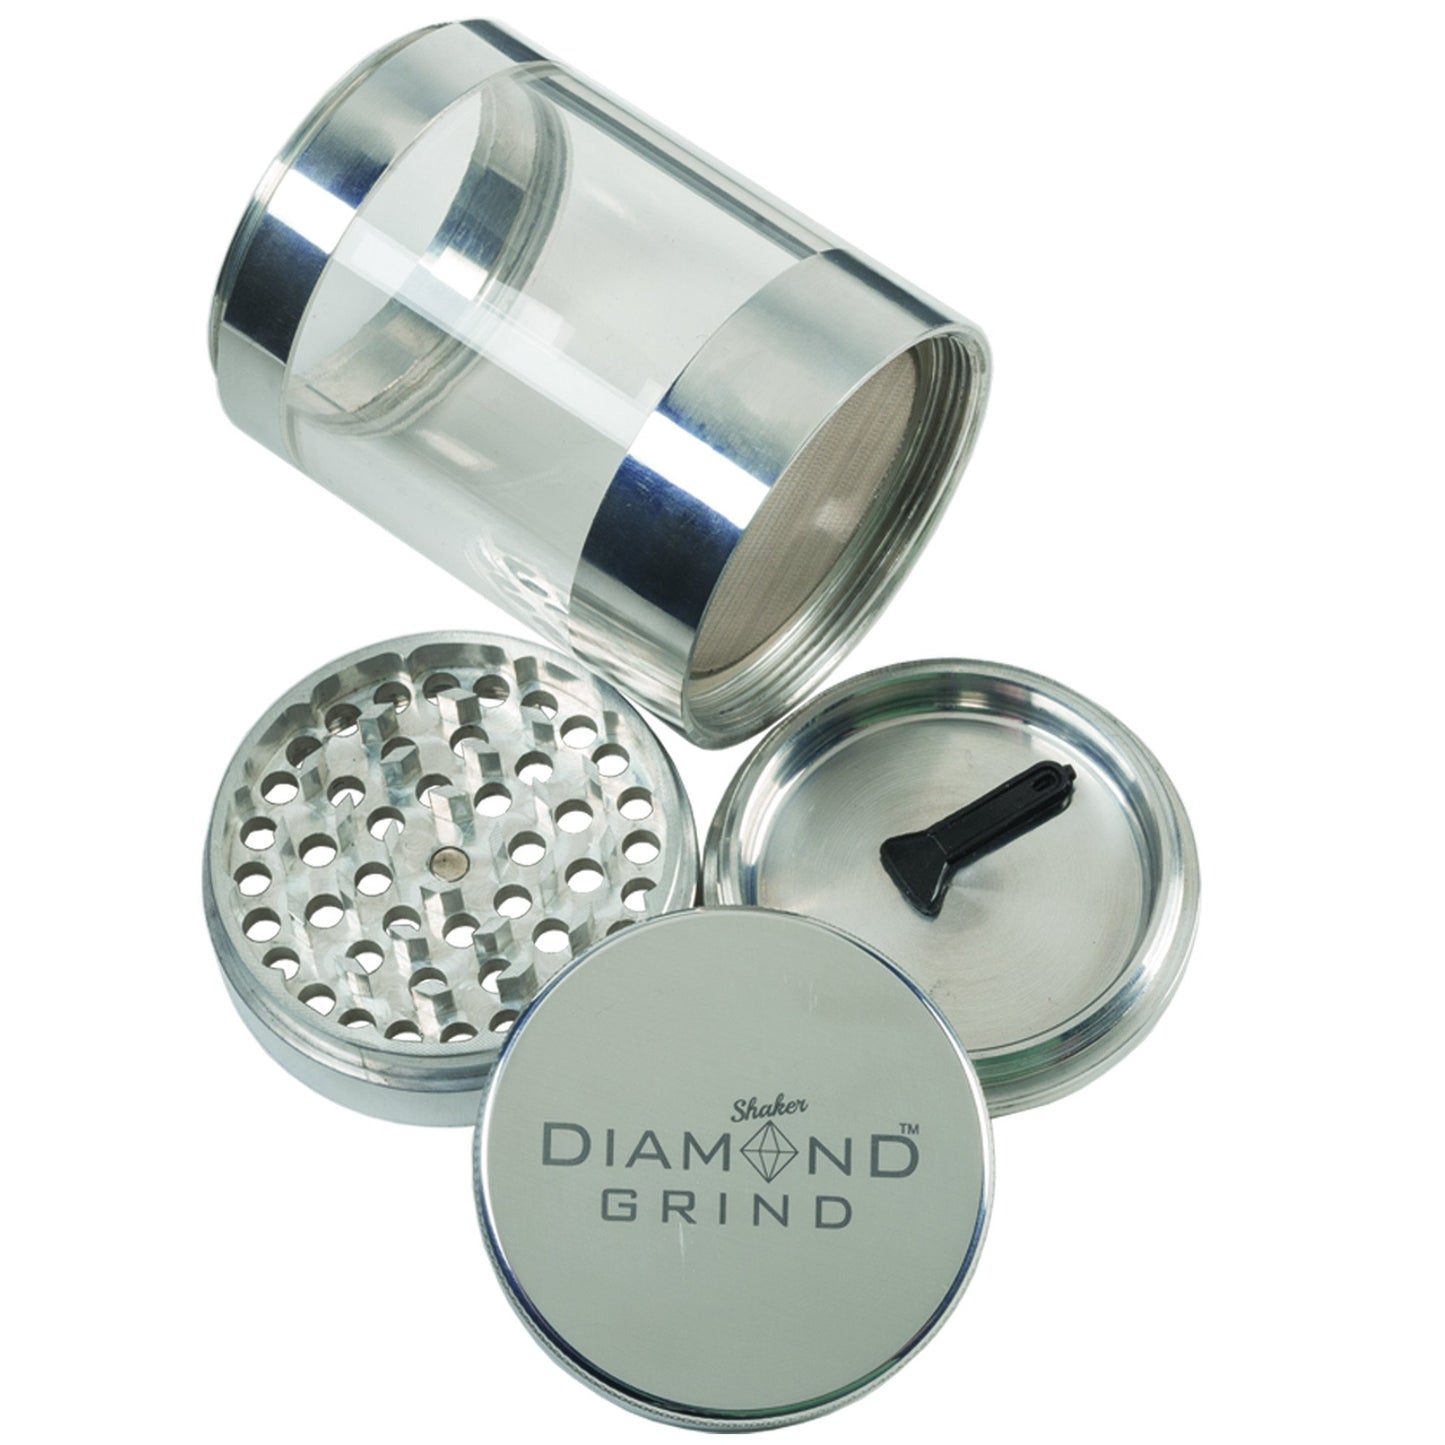 Diamond Grind Shaker, Herb Grinder & Storage